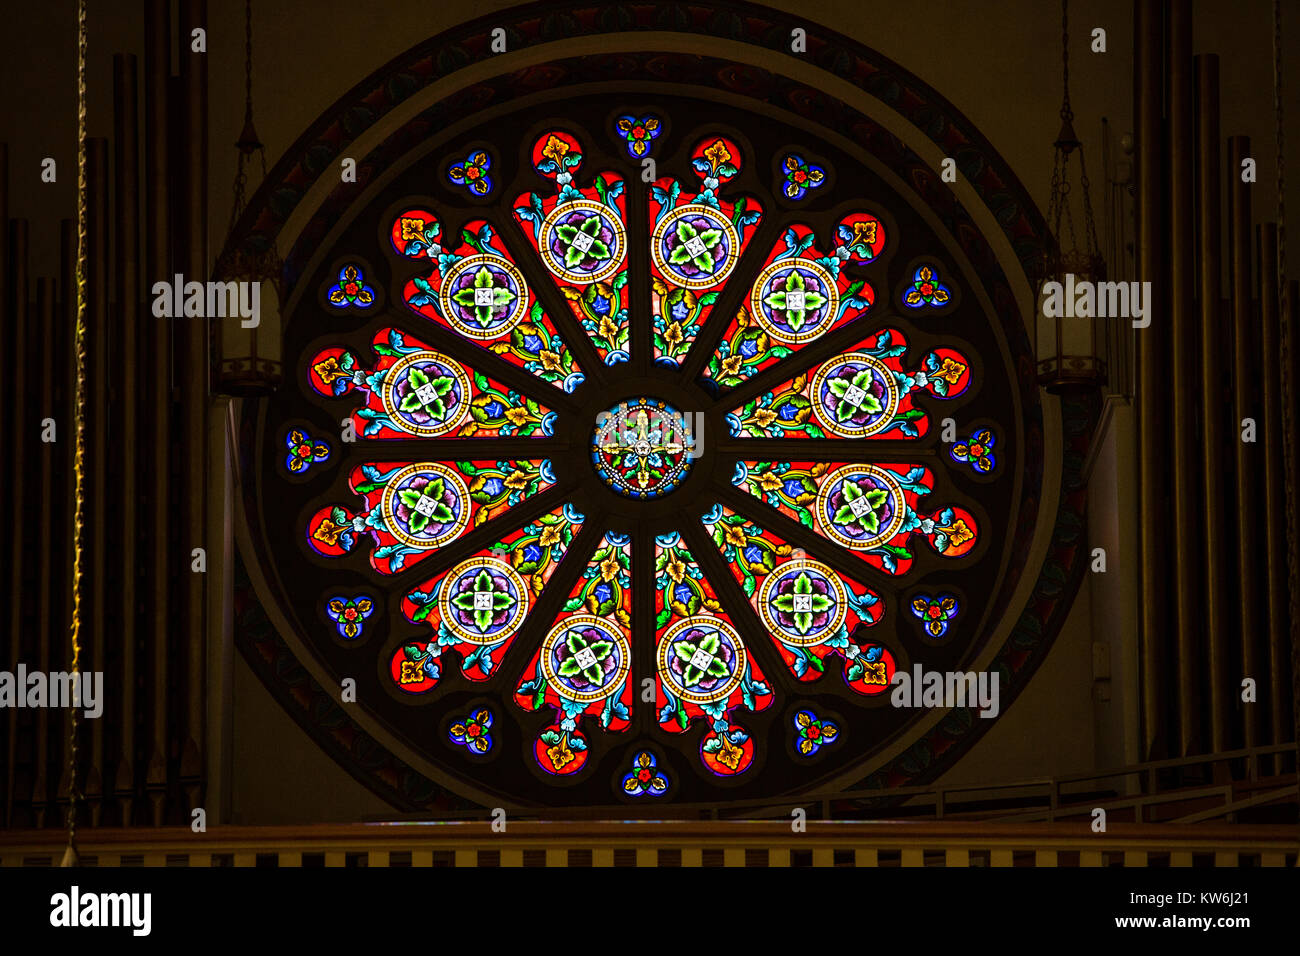 Cathedral Basilica of St. Francis of Assisi, Santa Fe, New Mexico Stock Photo